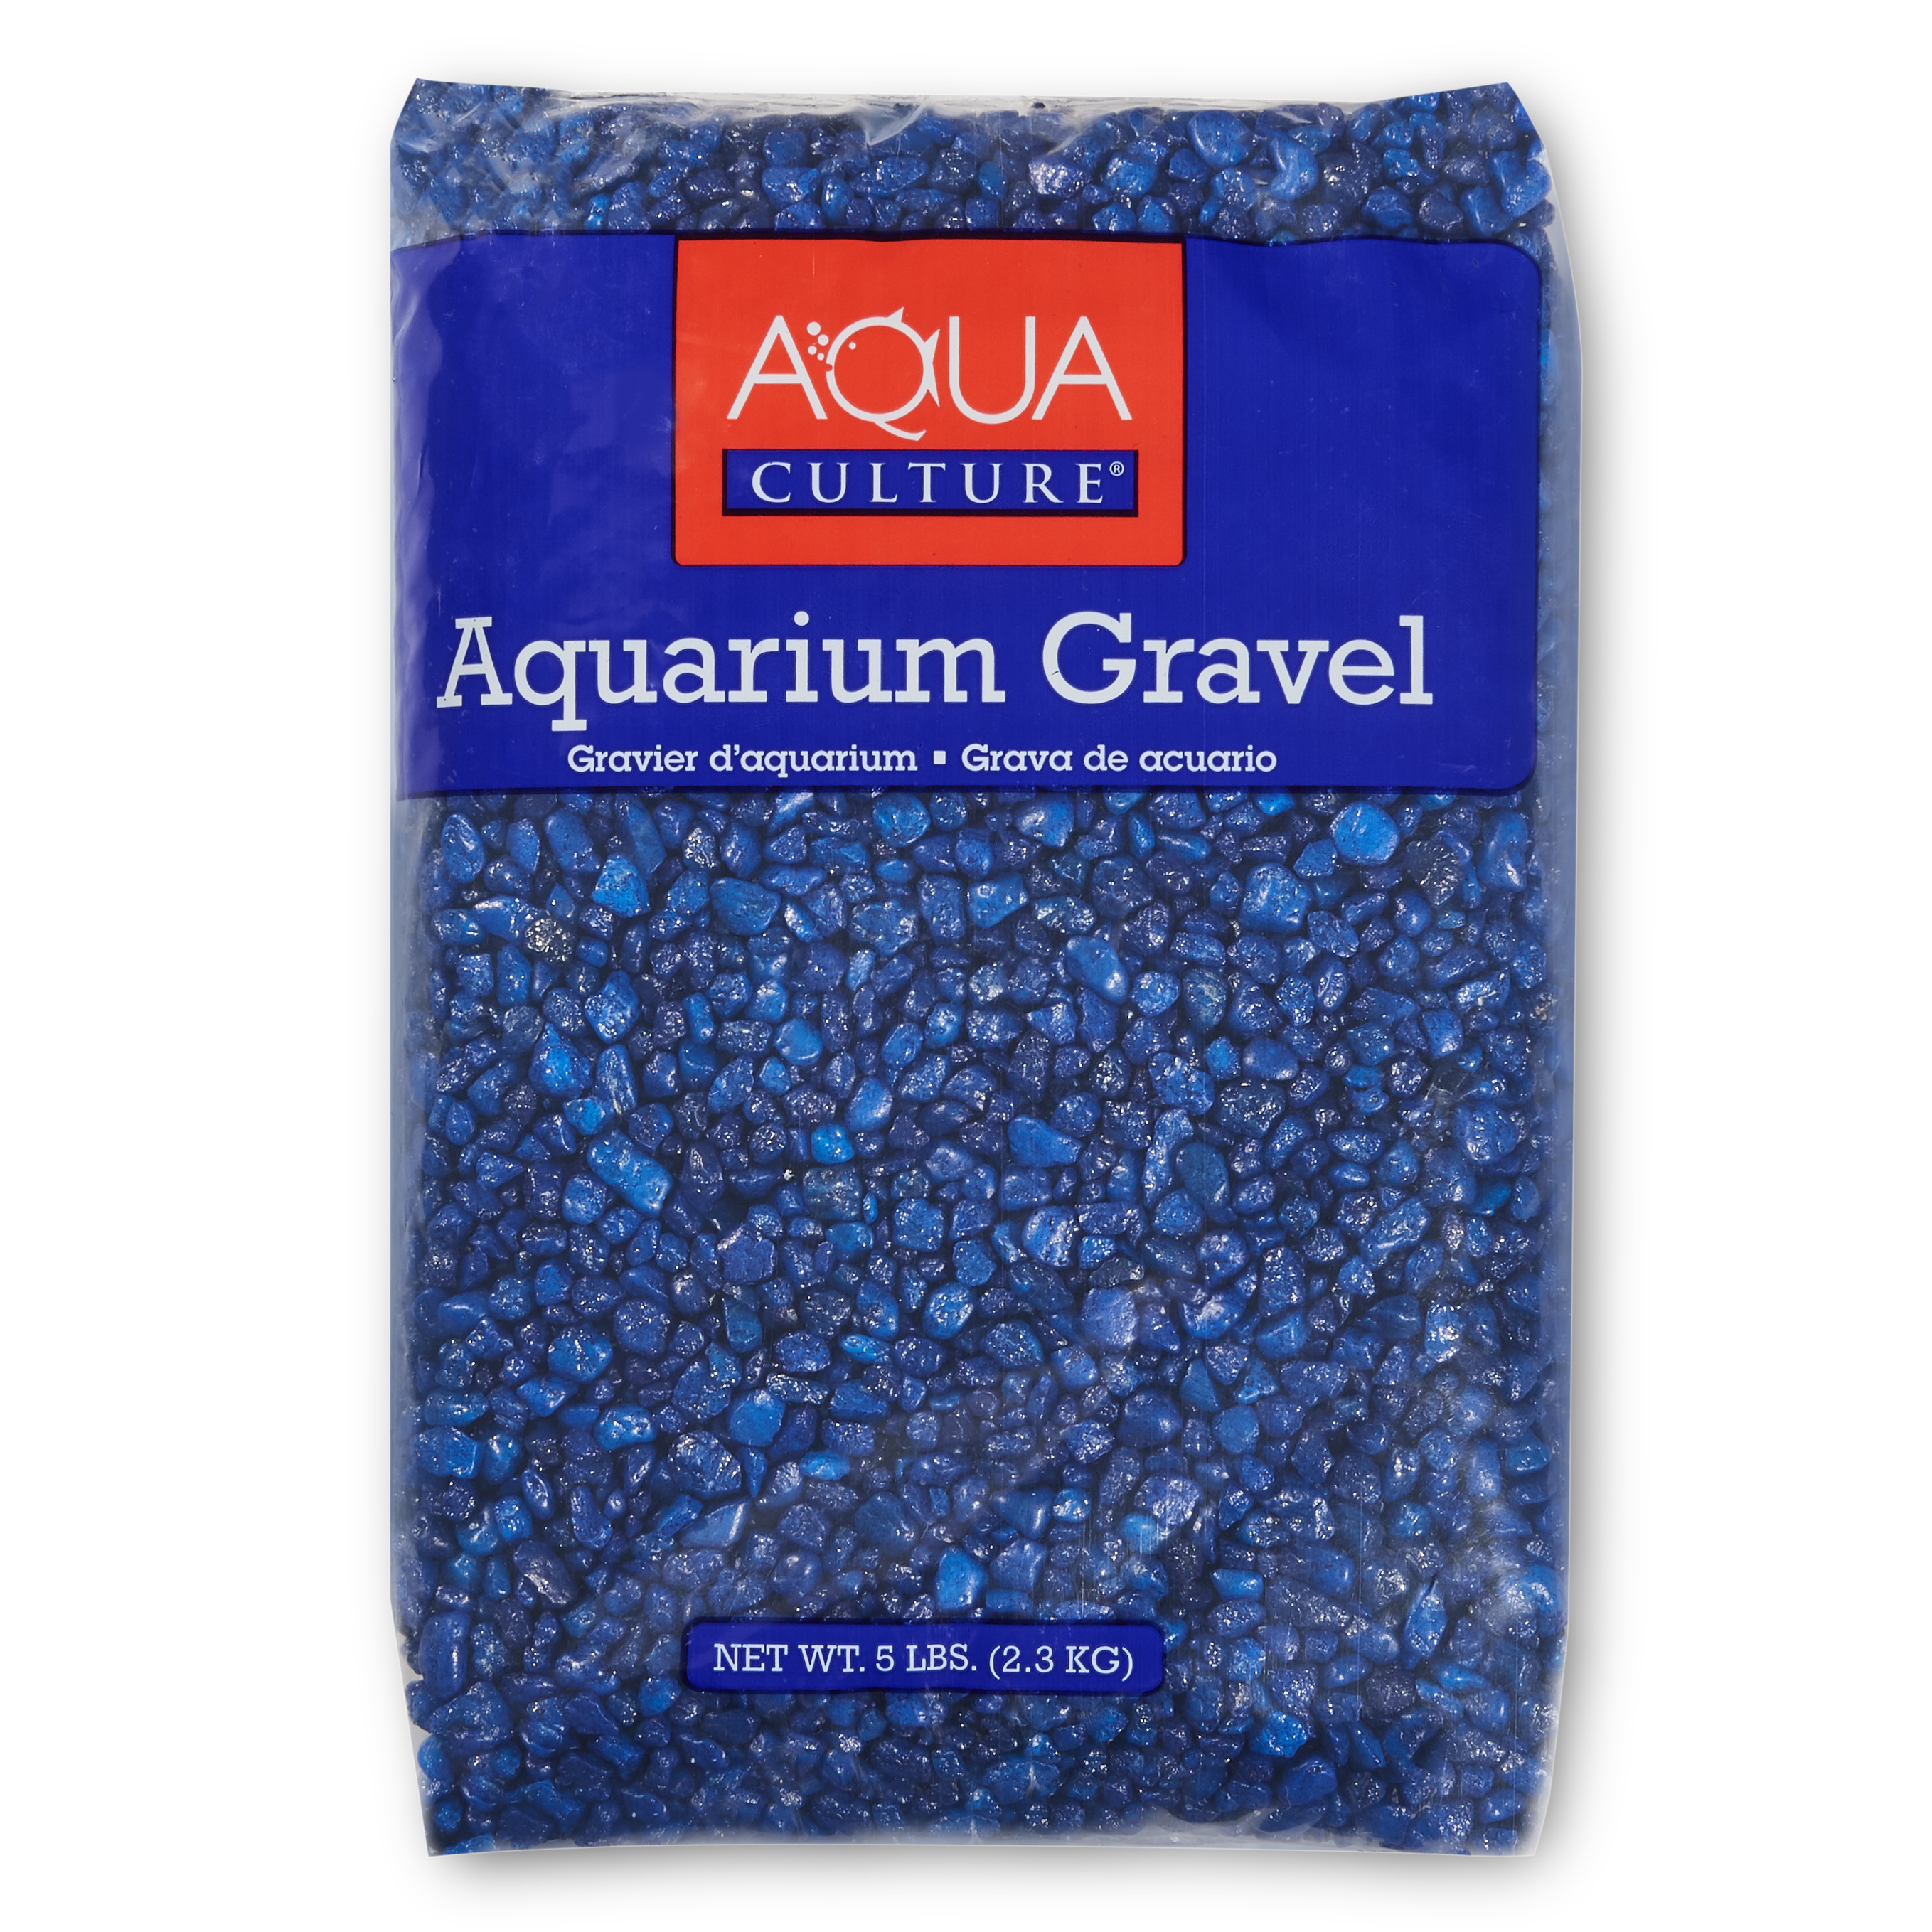 Aqua Culture Aquarium Gravel, Dark Blue, 5 lb - image 1 of 4